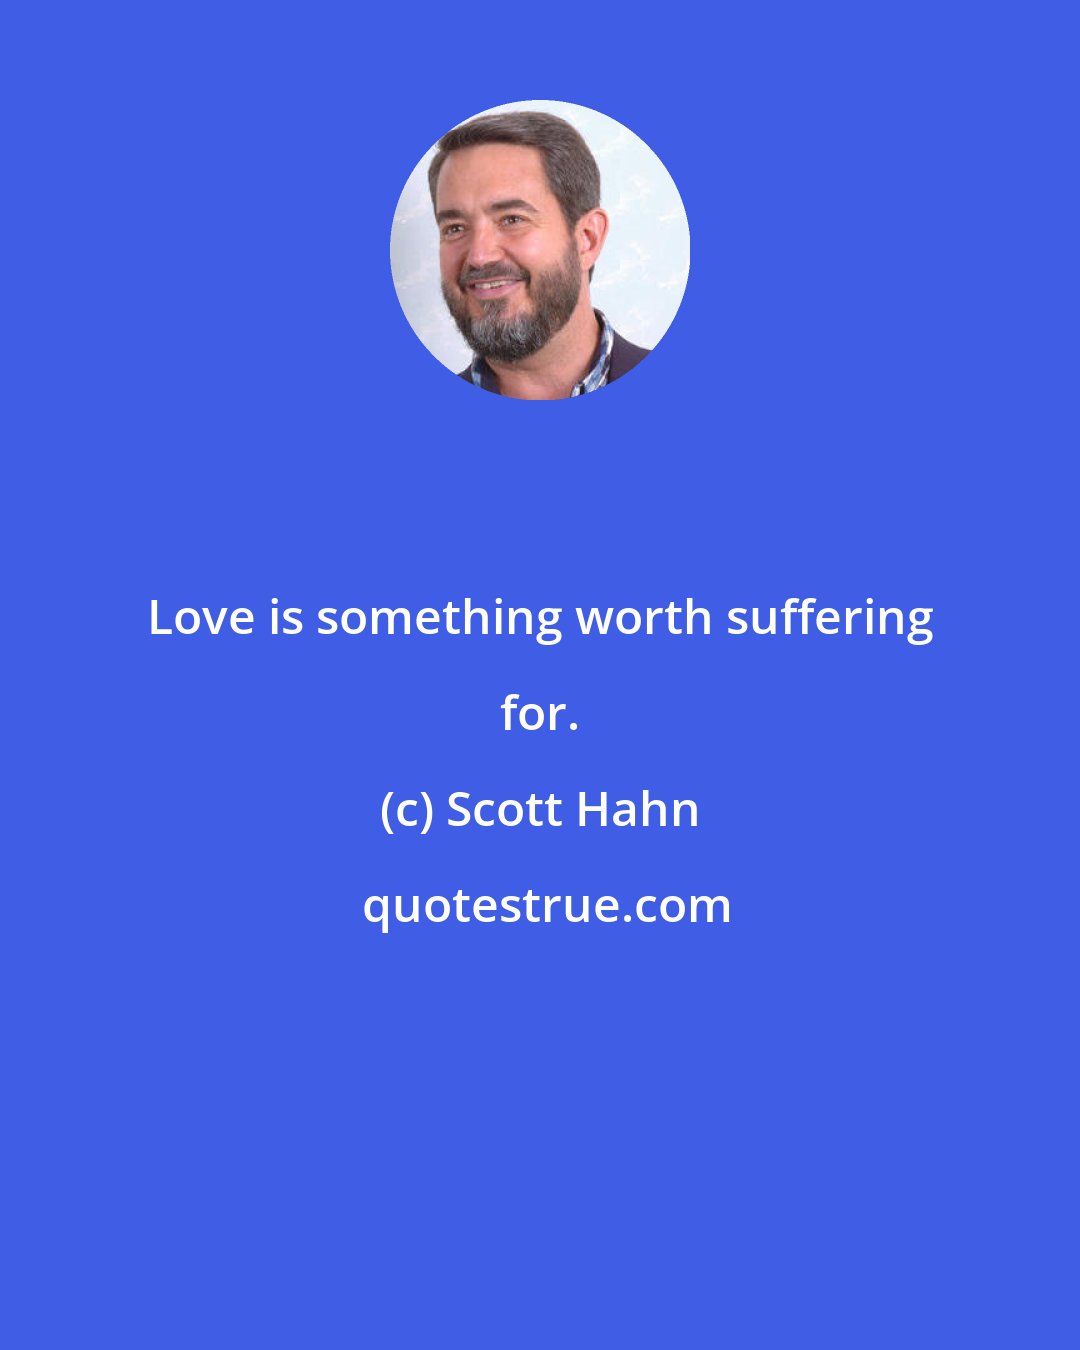 Scott Hahn: Love is something worth suffering for.